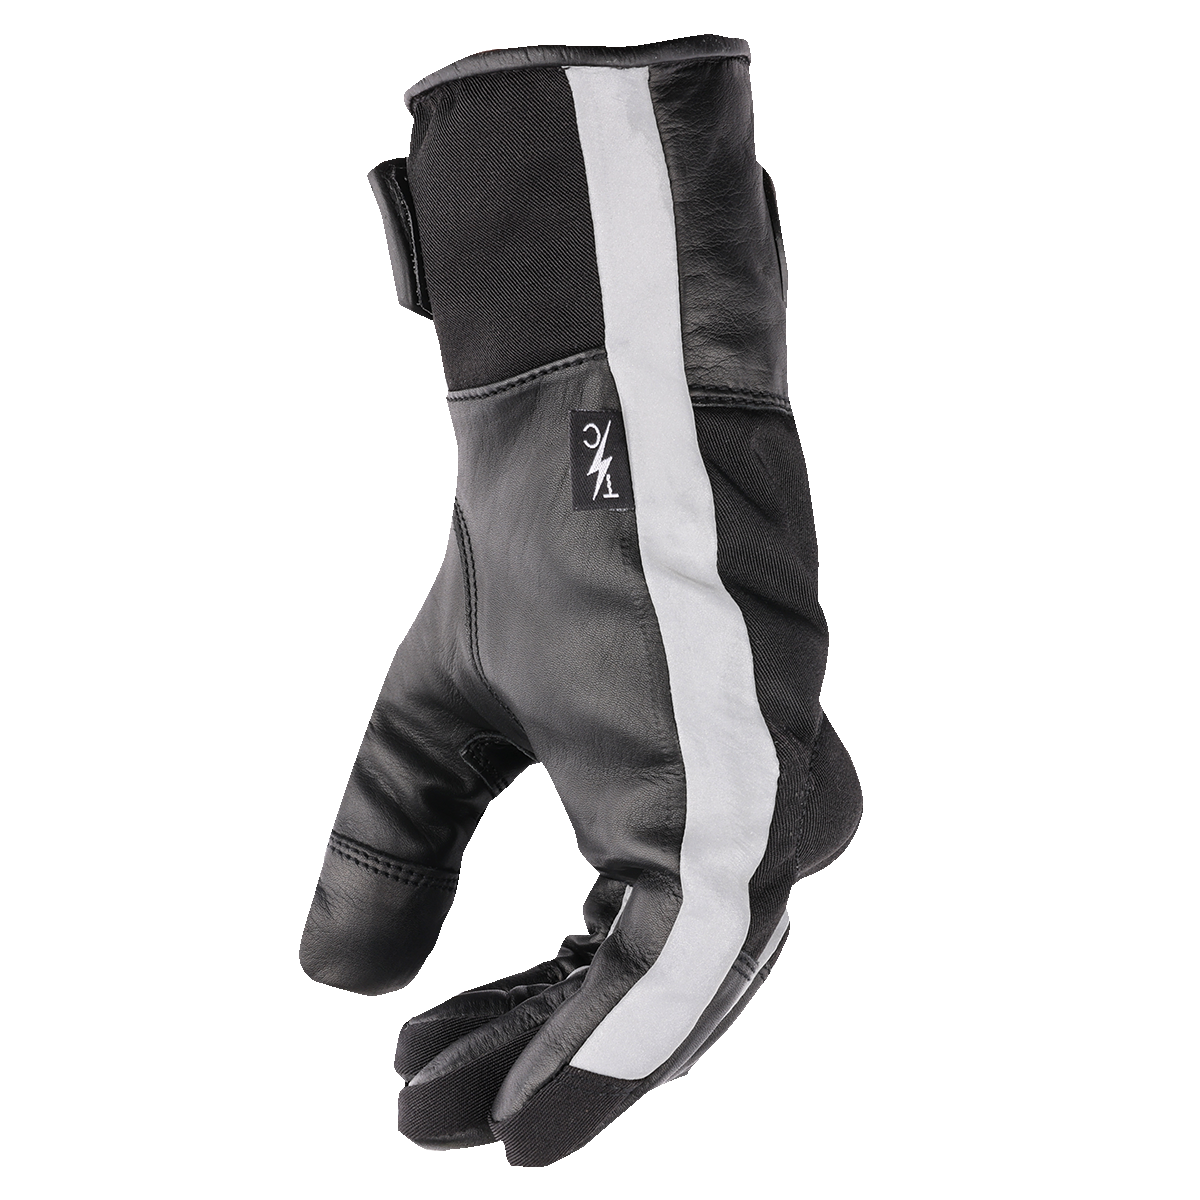 THRASHIN SUPPLY CO. Mission Waterproof Gloves - Black - Large TWG--00-10